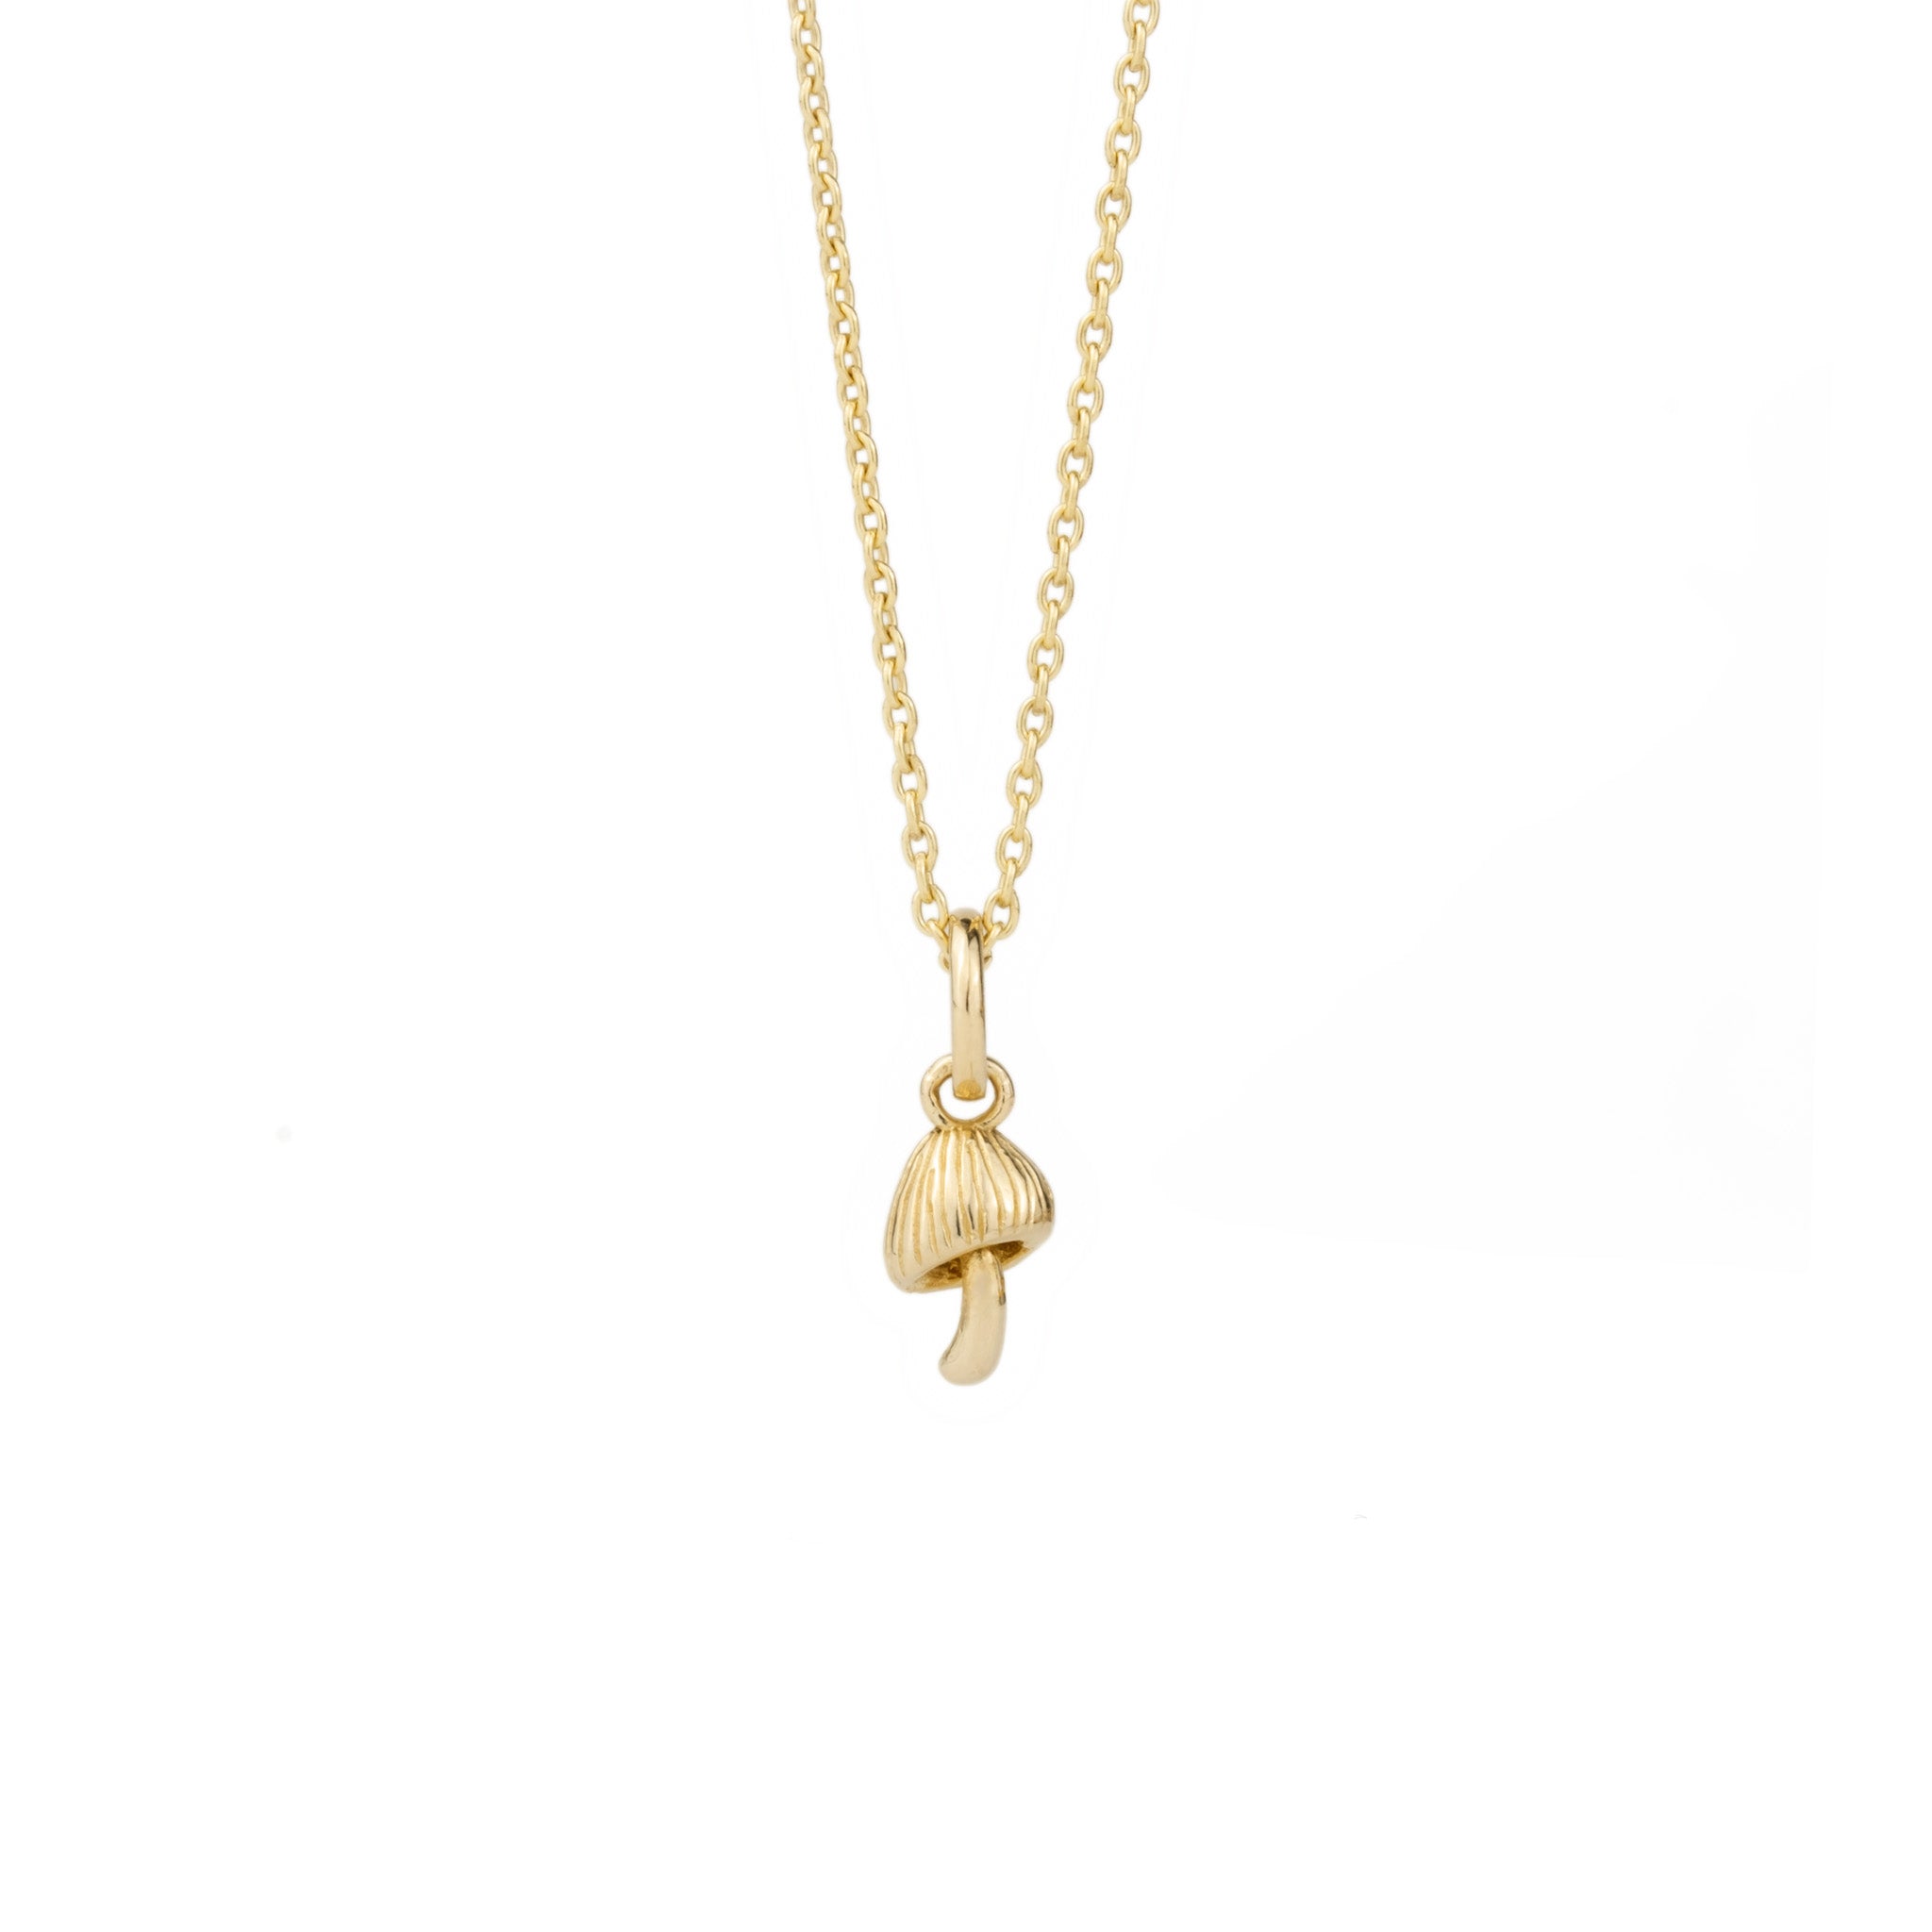 An Aiden Jae Mini Mushroom Charm Necklace.